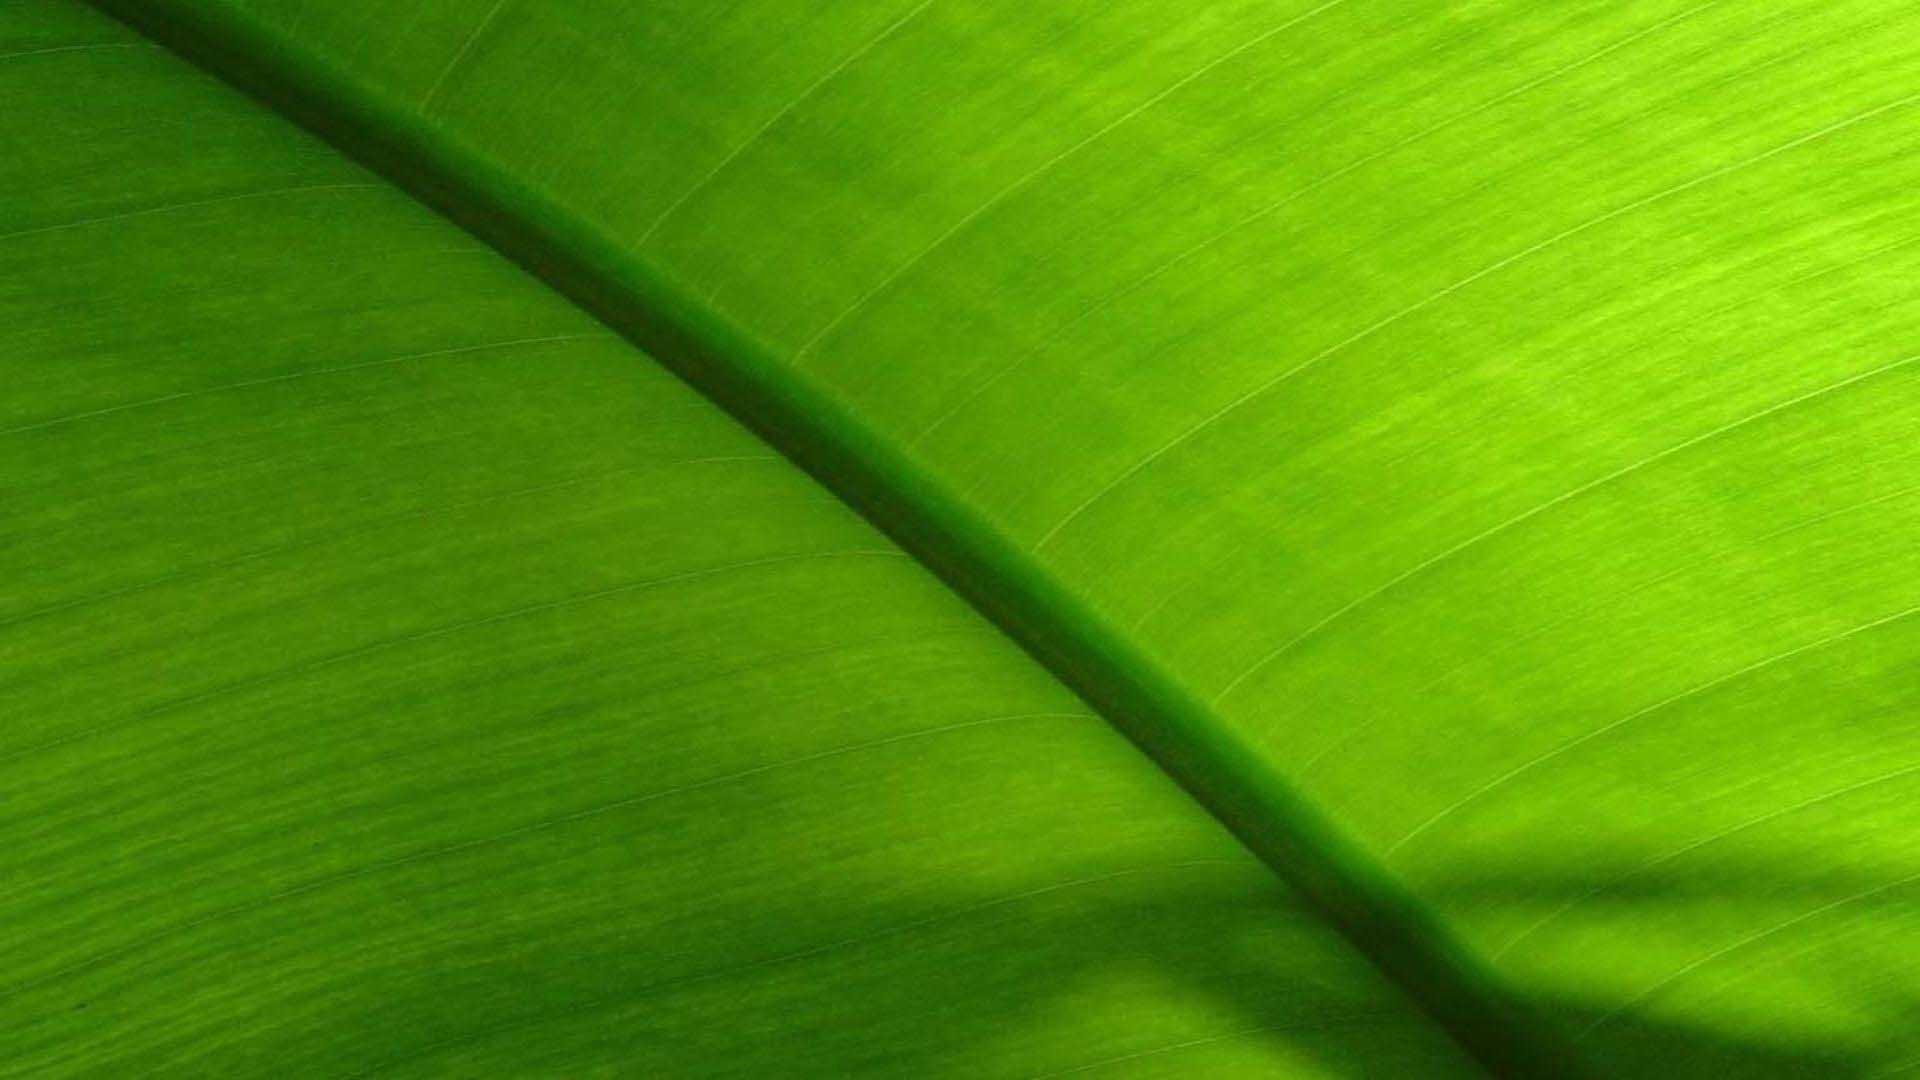 Banana Leaf Backgrounds | PixelsTalk.Net1920 x 1080